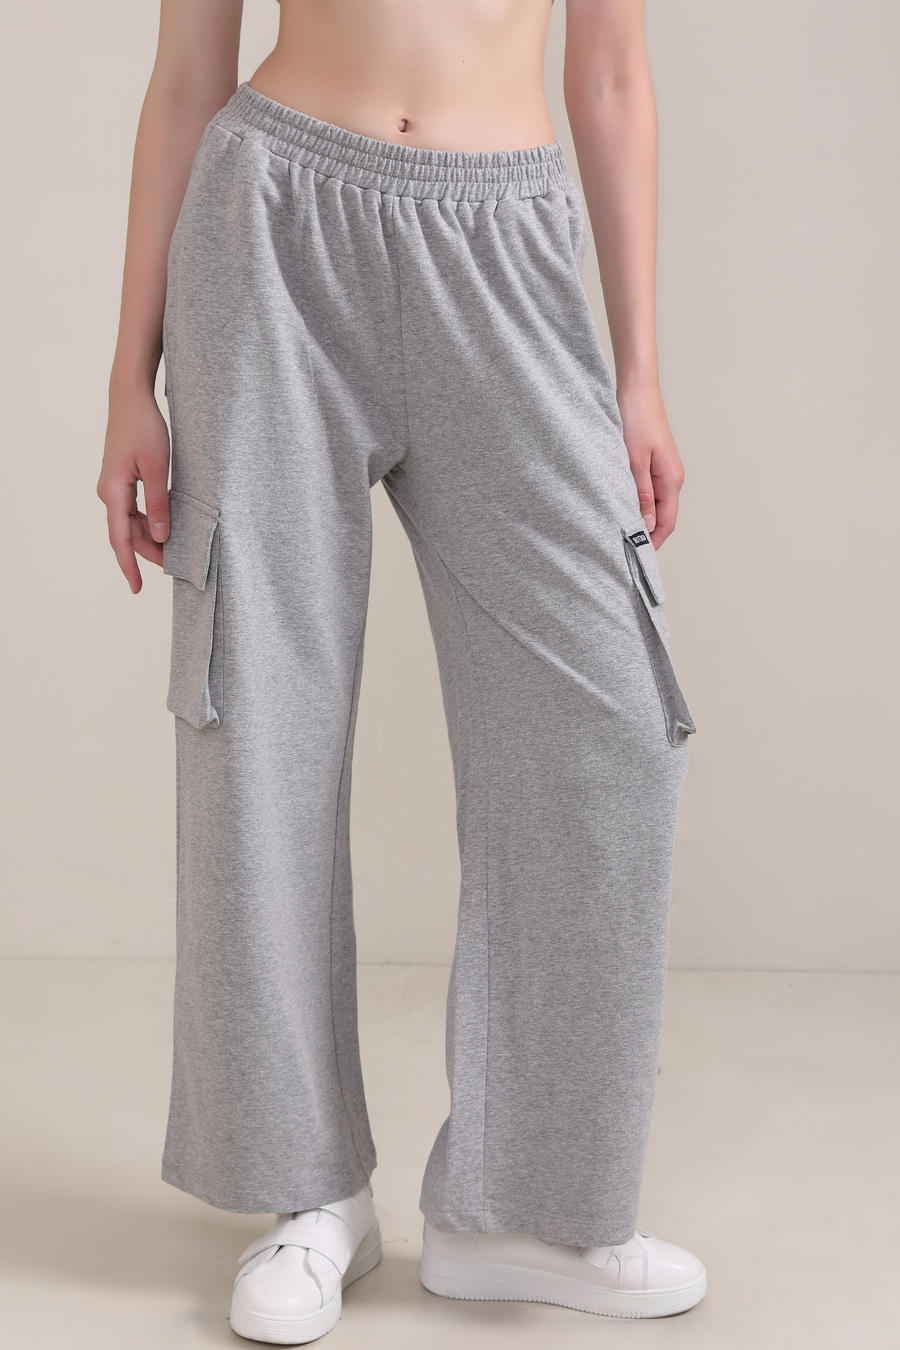 Melange Grey - Cargo pants